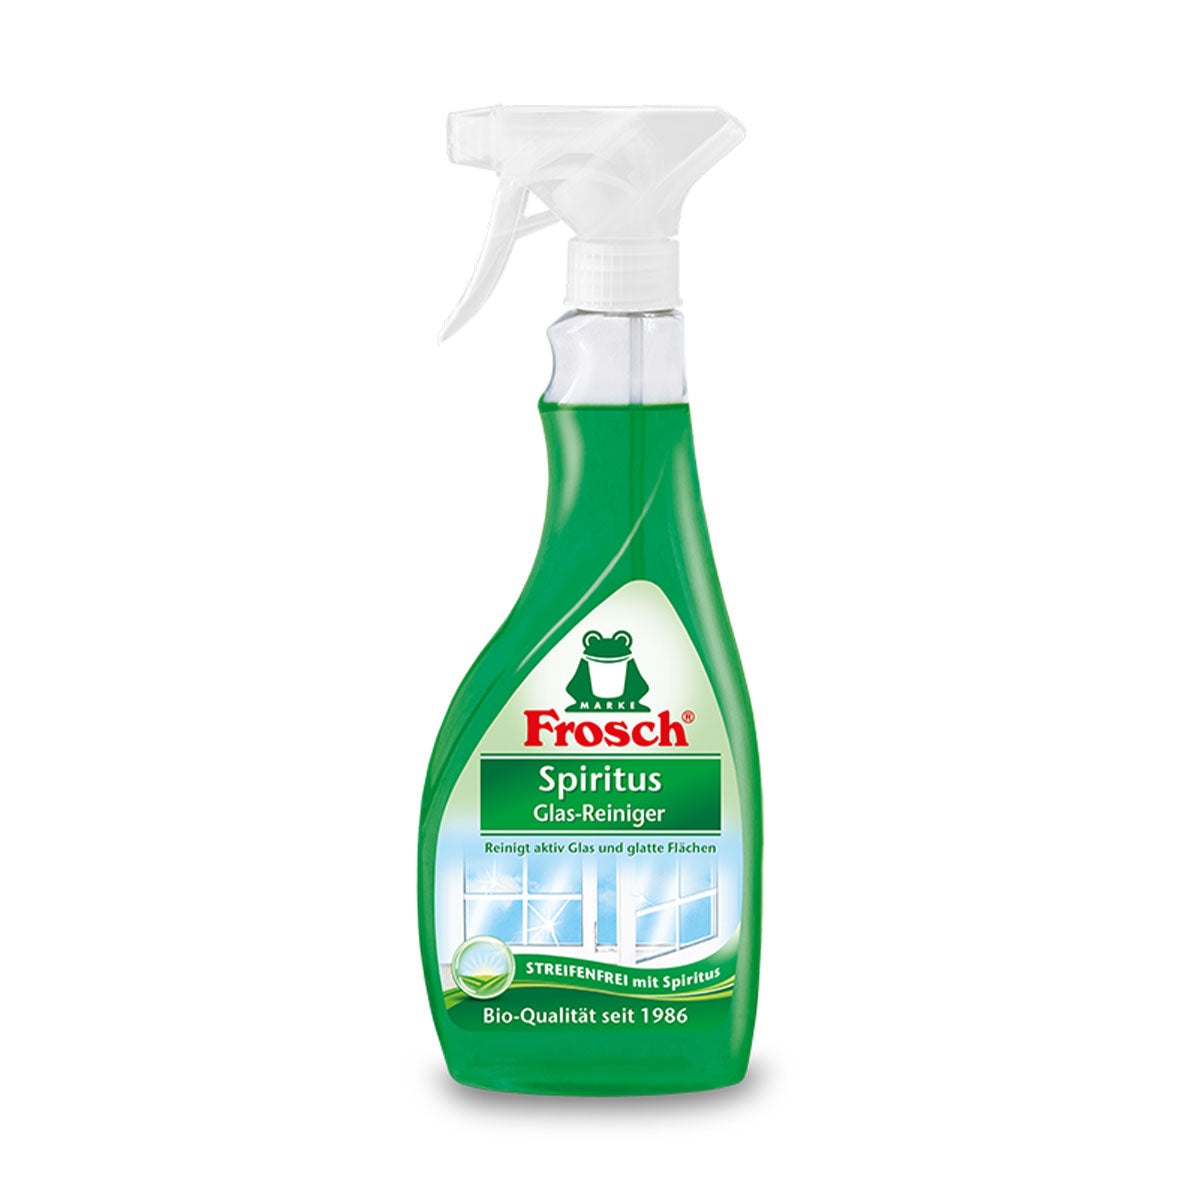 Limpiavidrios Spiritus Frosch 500 ml - Producto Ecológico